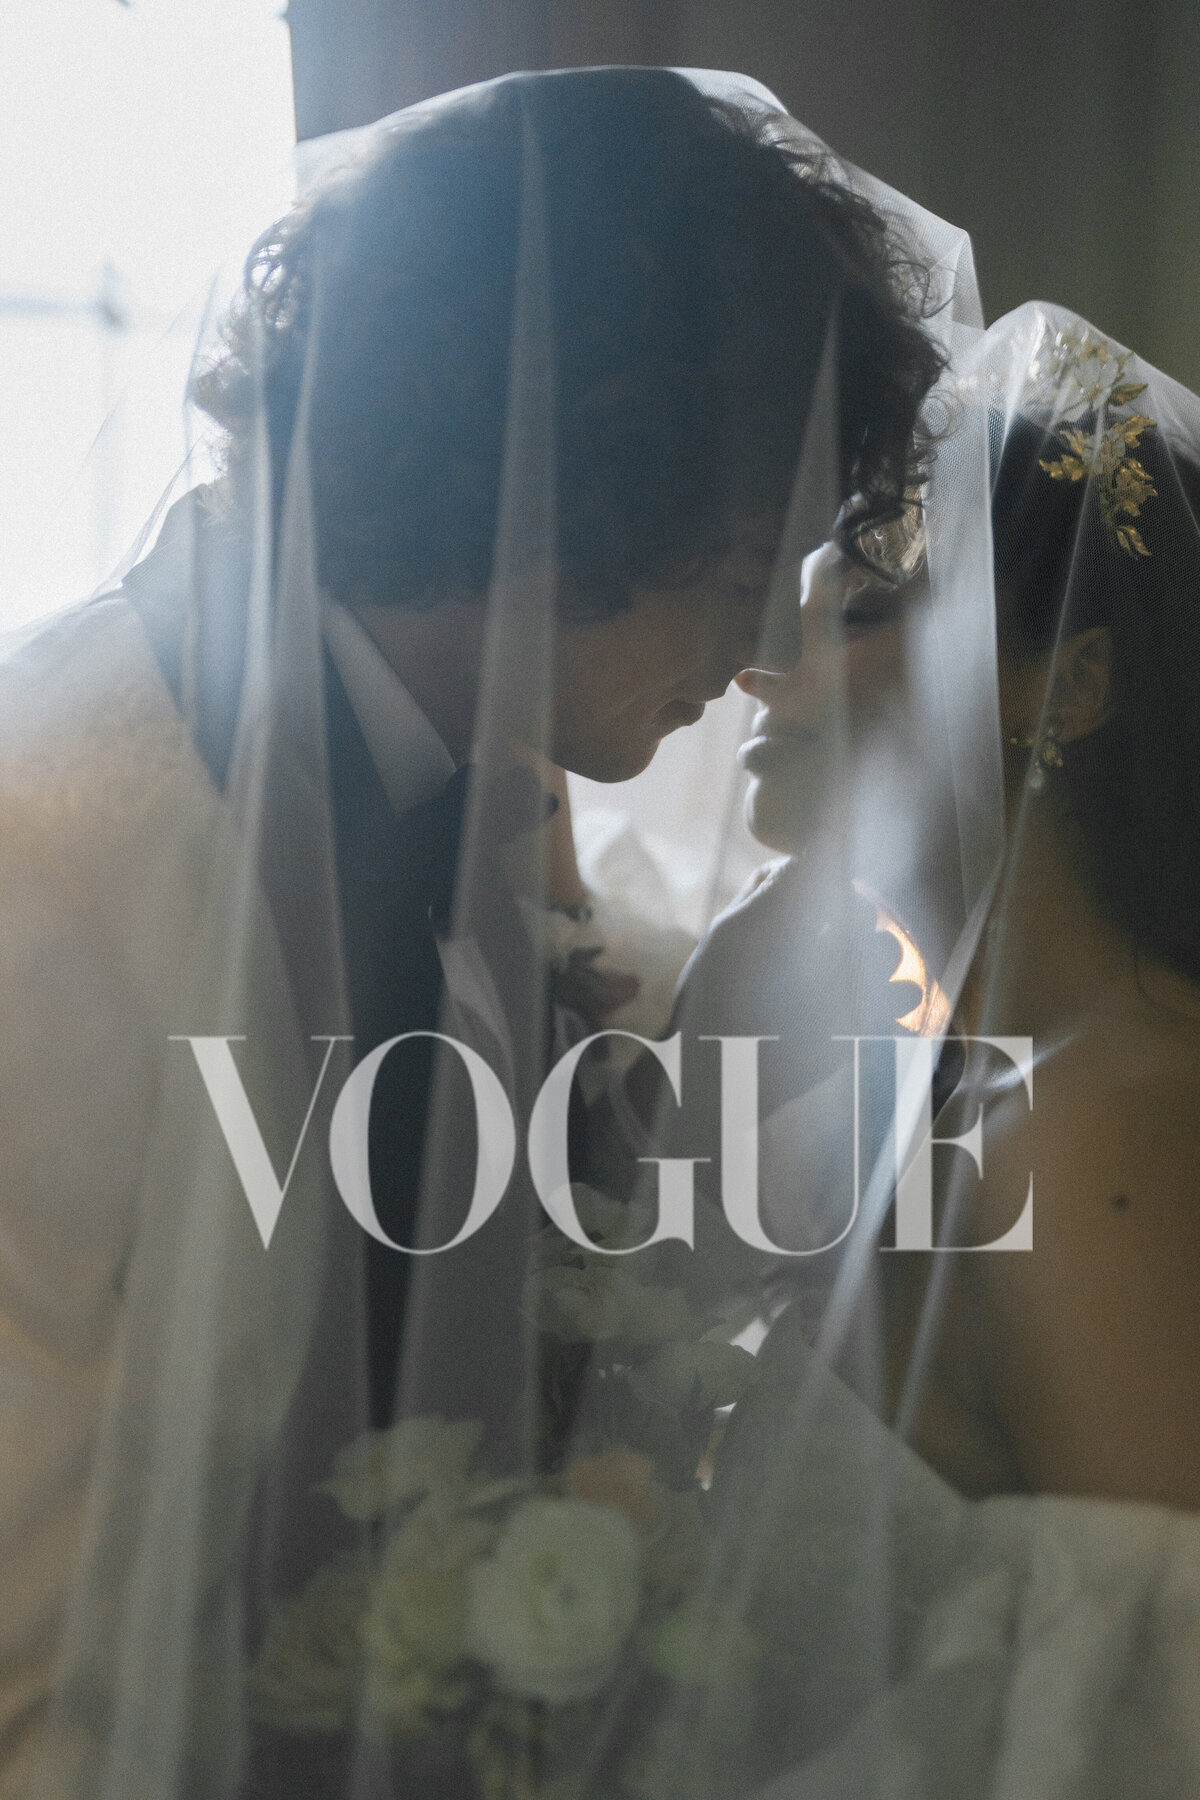 2 Vogue As Seen in British Vogue The University Club Toronto Wedding Photographer Lisa Vigliotta Photography